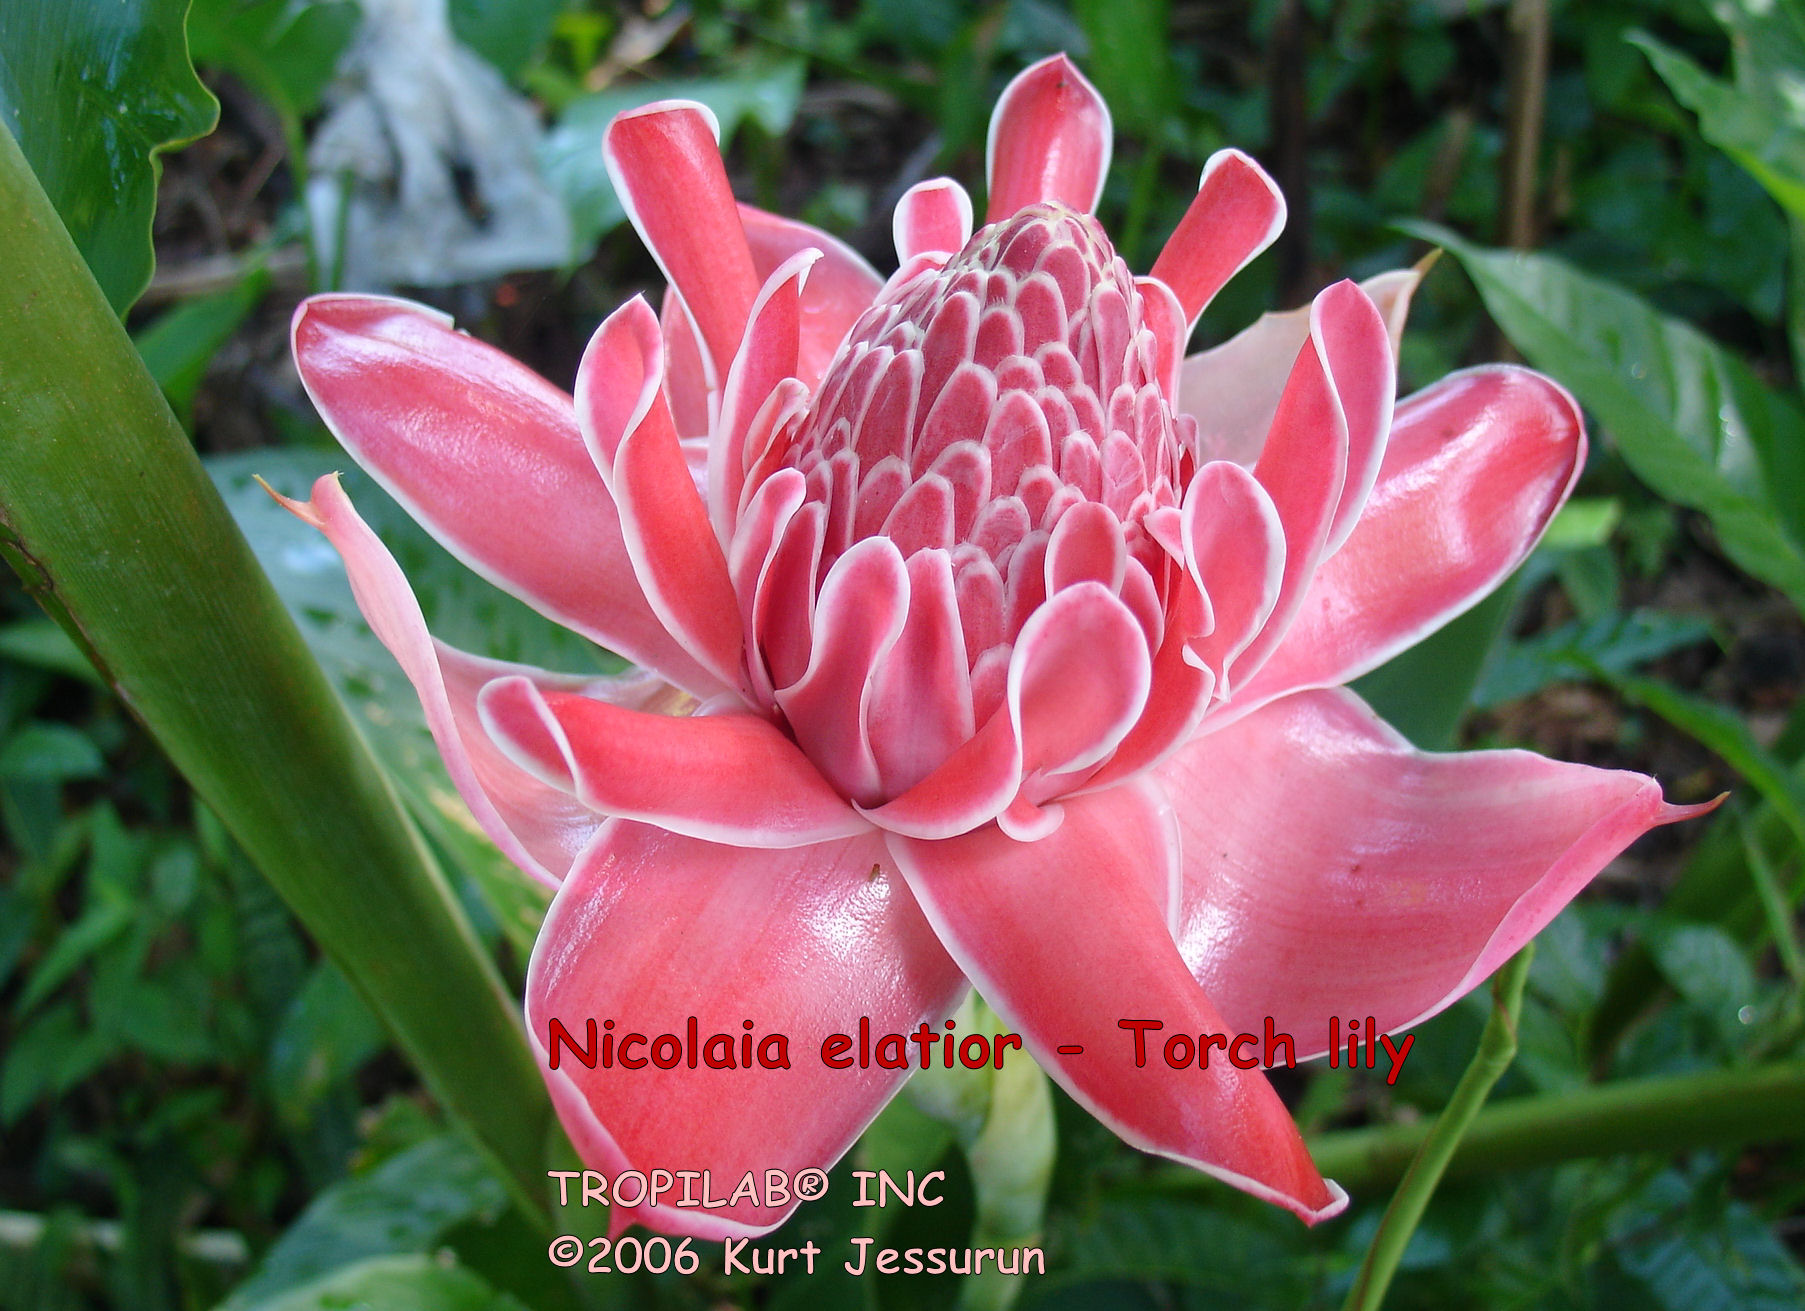 Nicolaia elatior - Torch lily